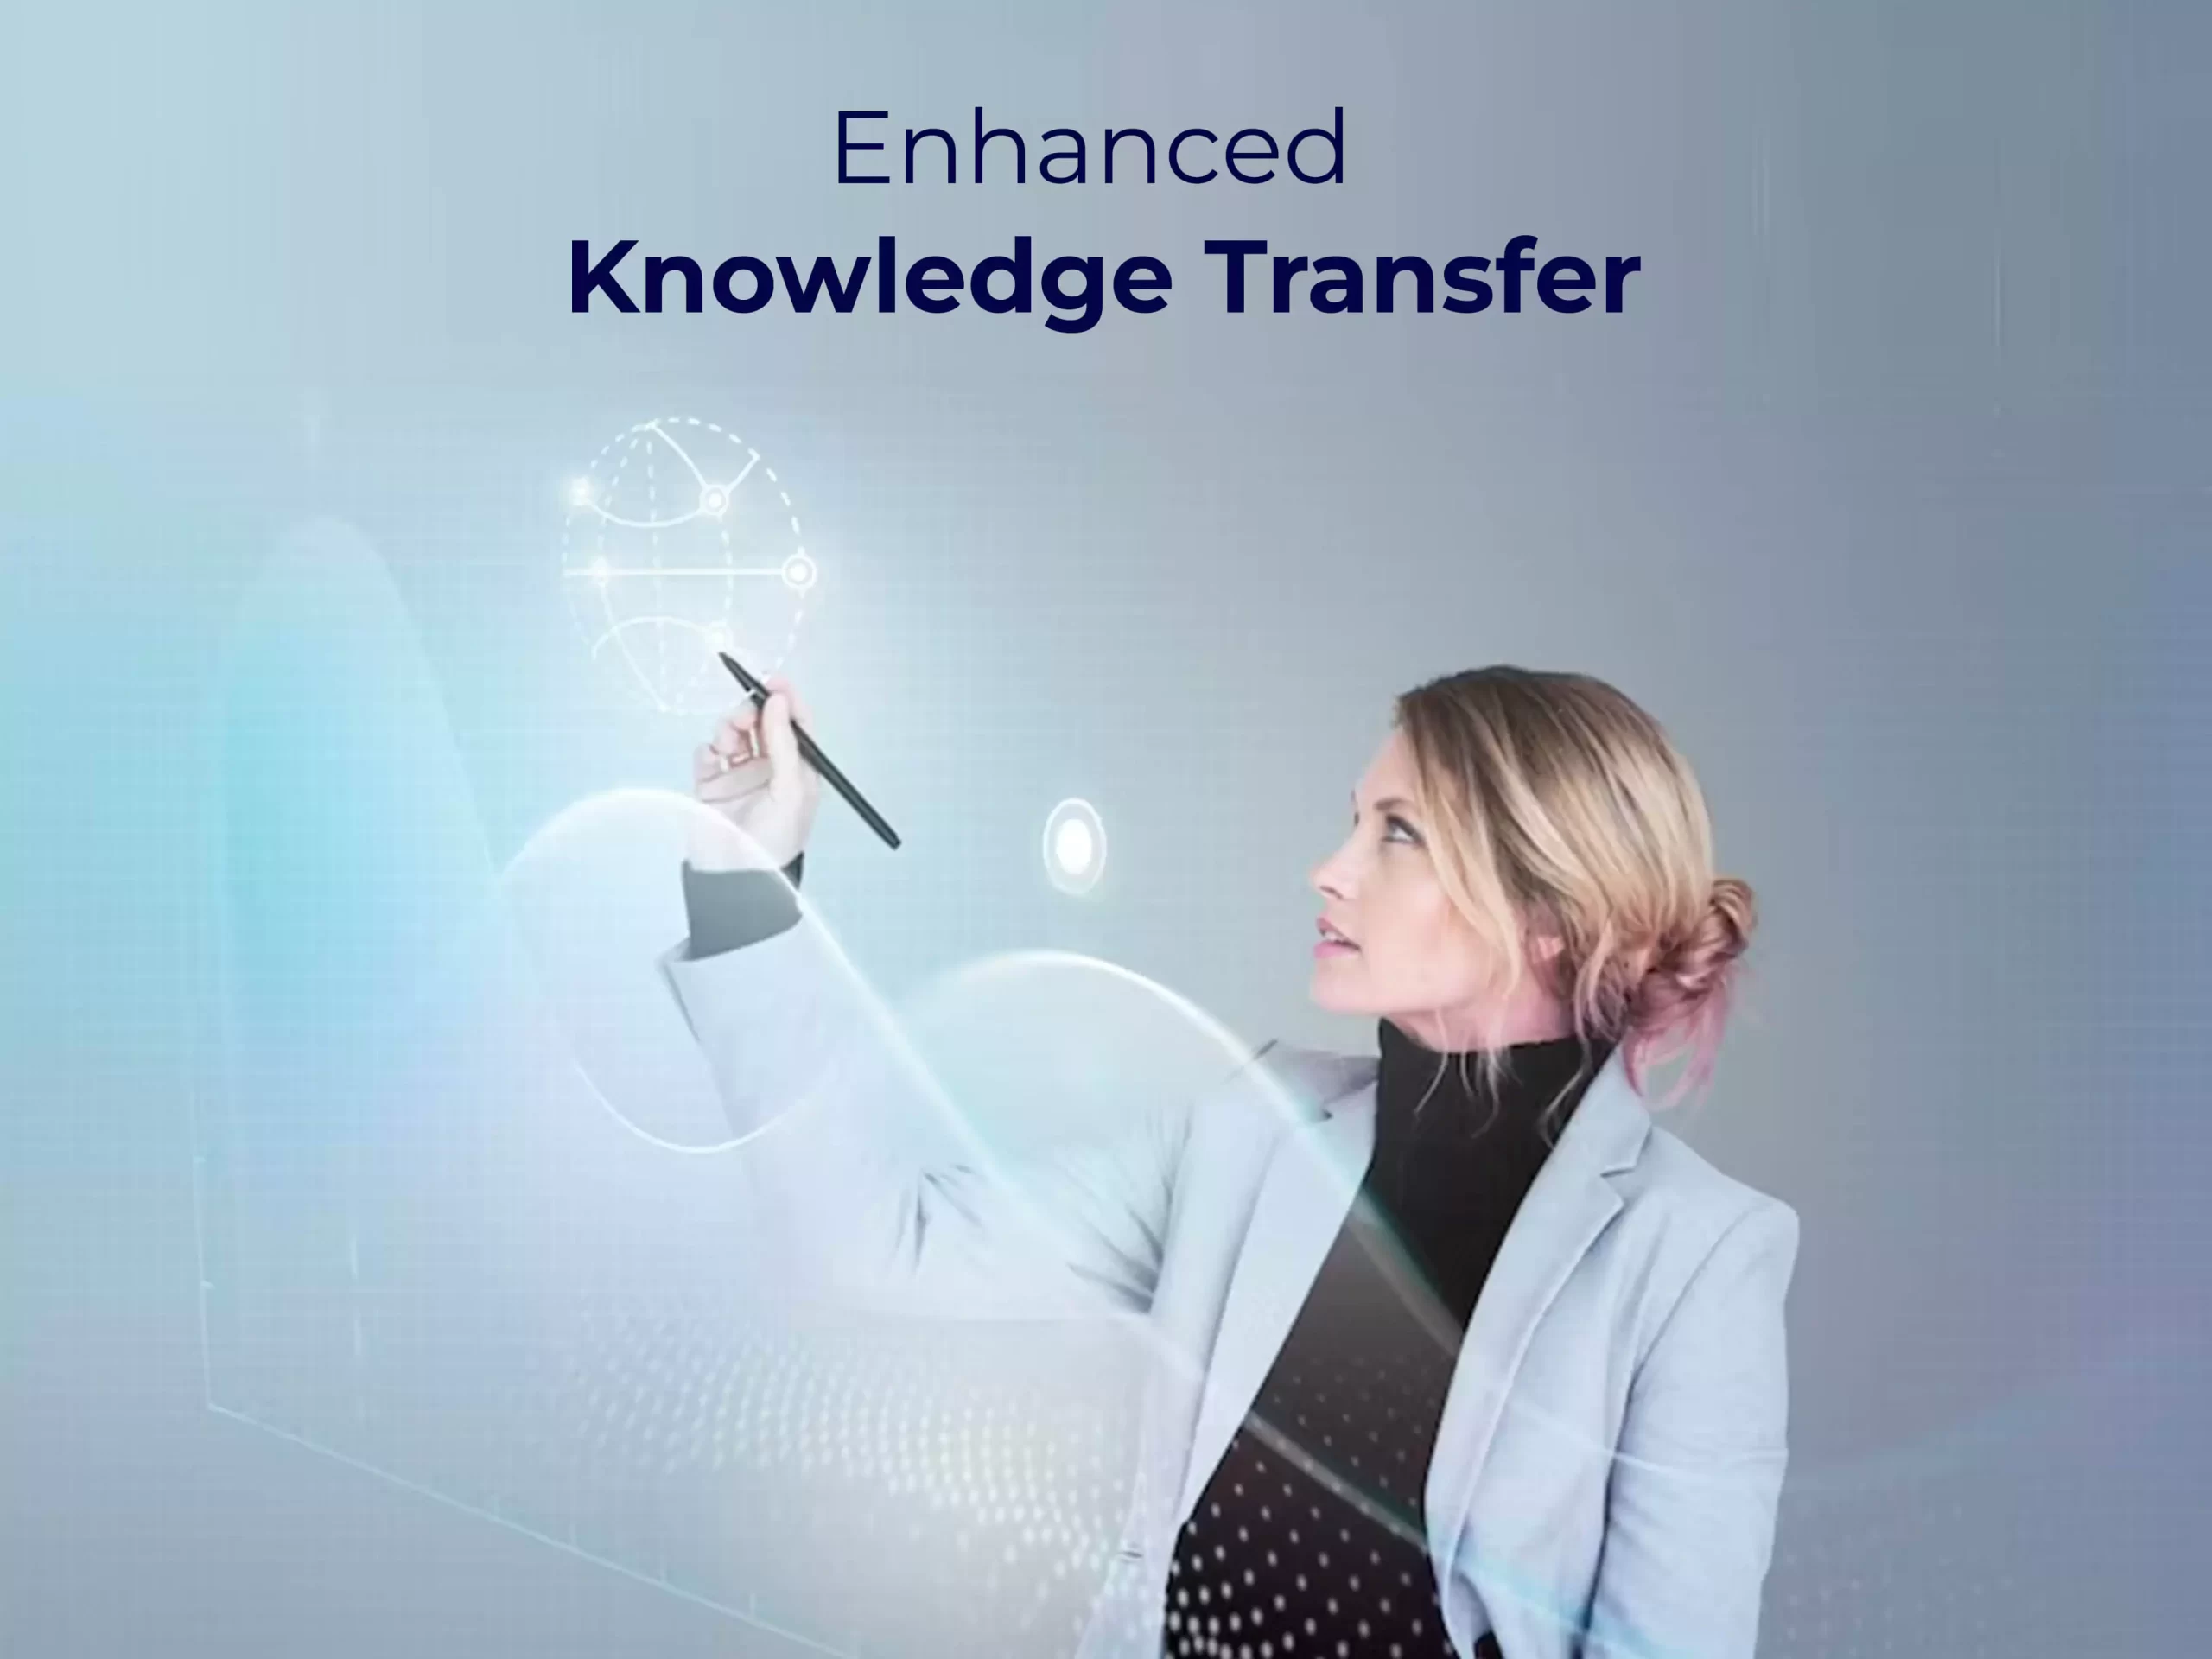 Enhanced knowledge transfer